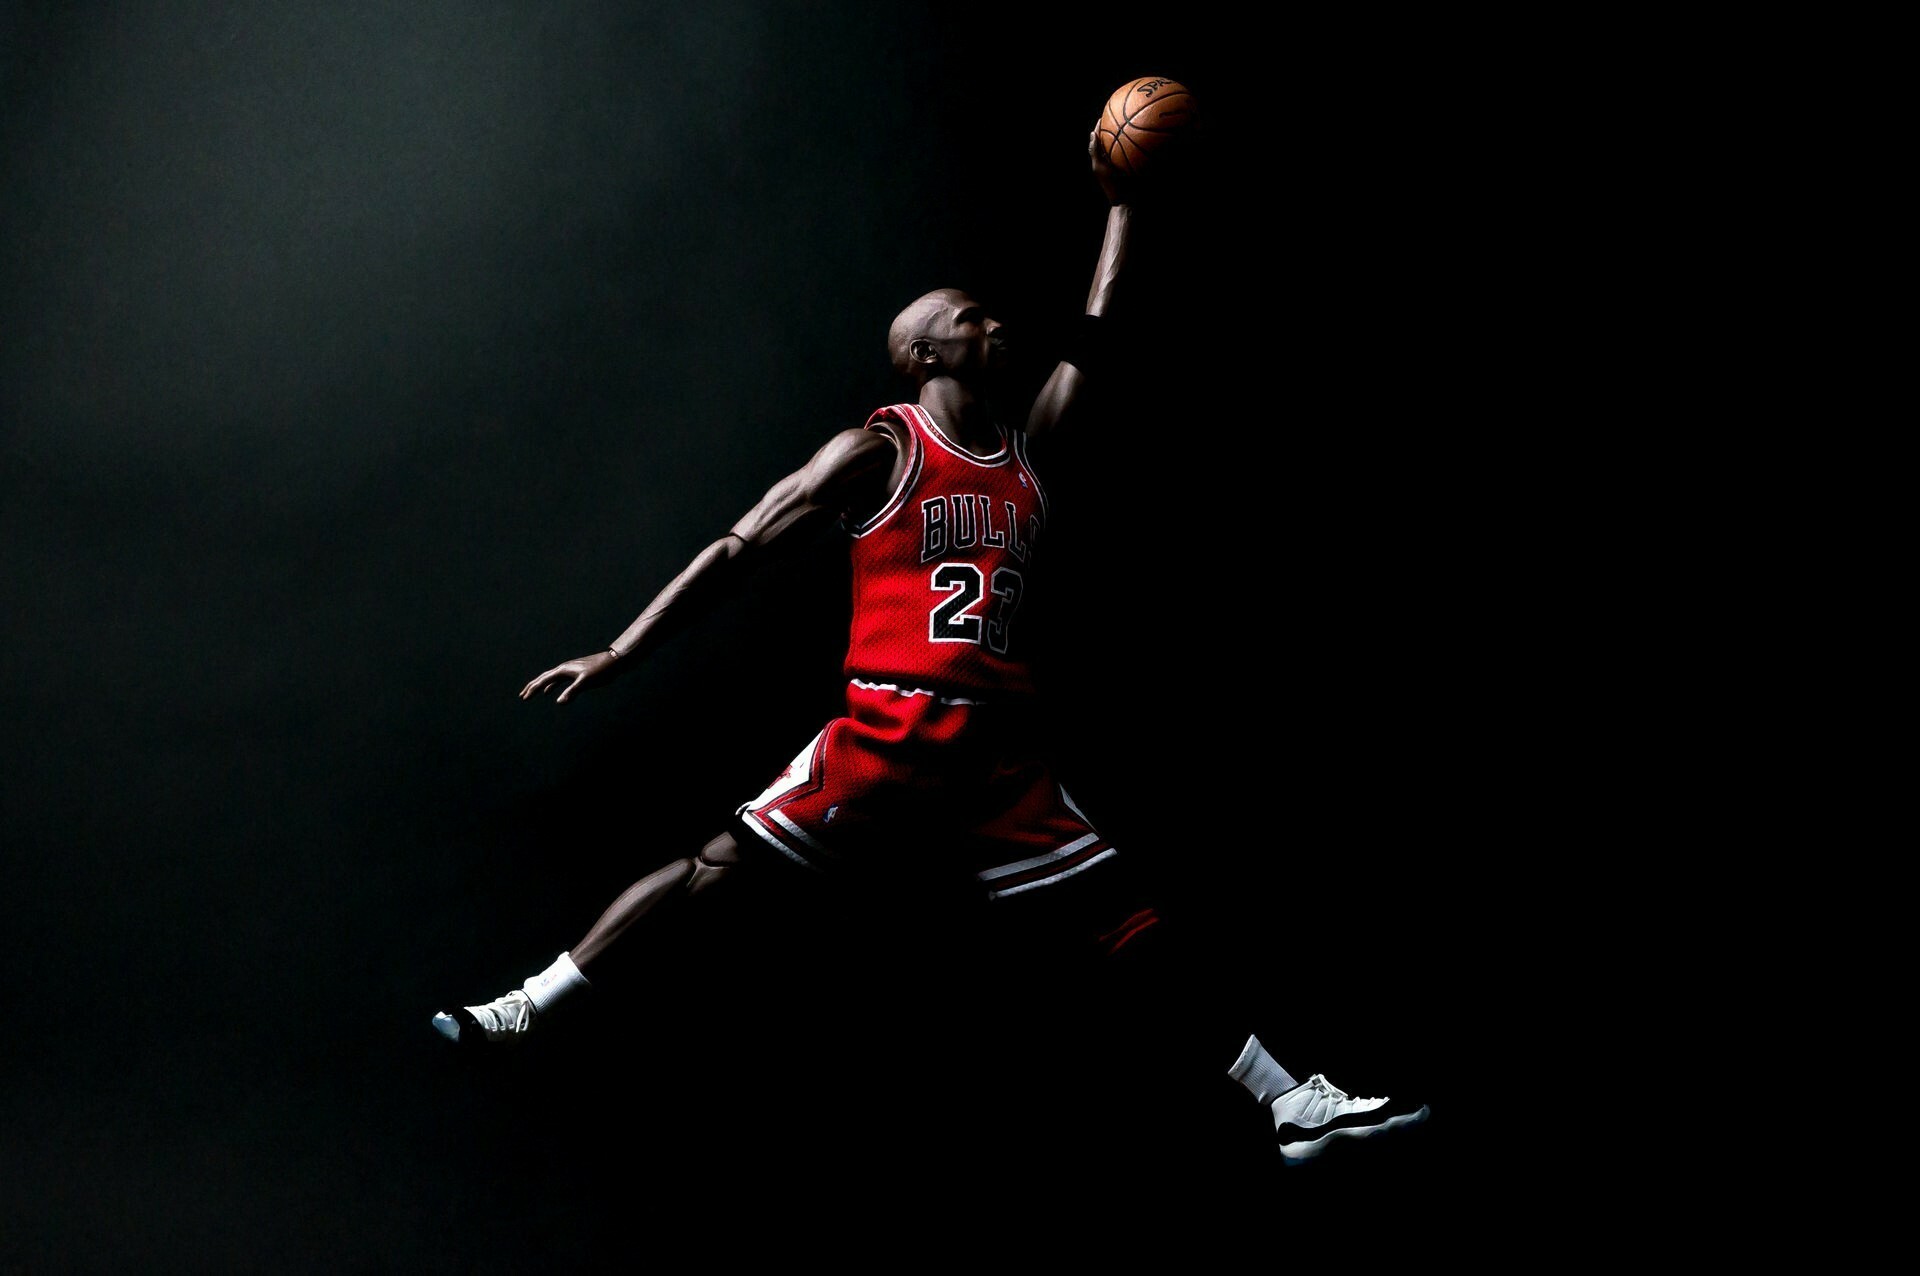 Michael Jordan: Made his NBA debut at Chicago Stadium on October 26, 1984. 1920x1280 HD Wallpaper.